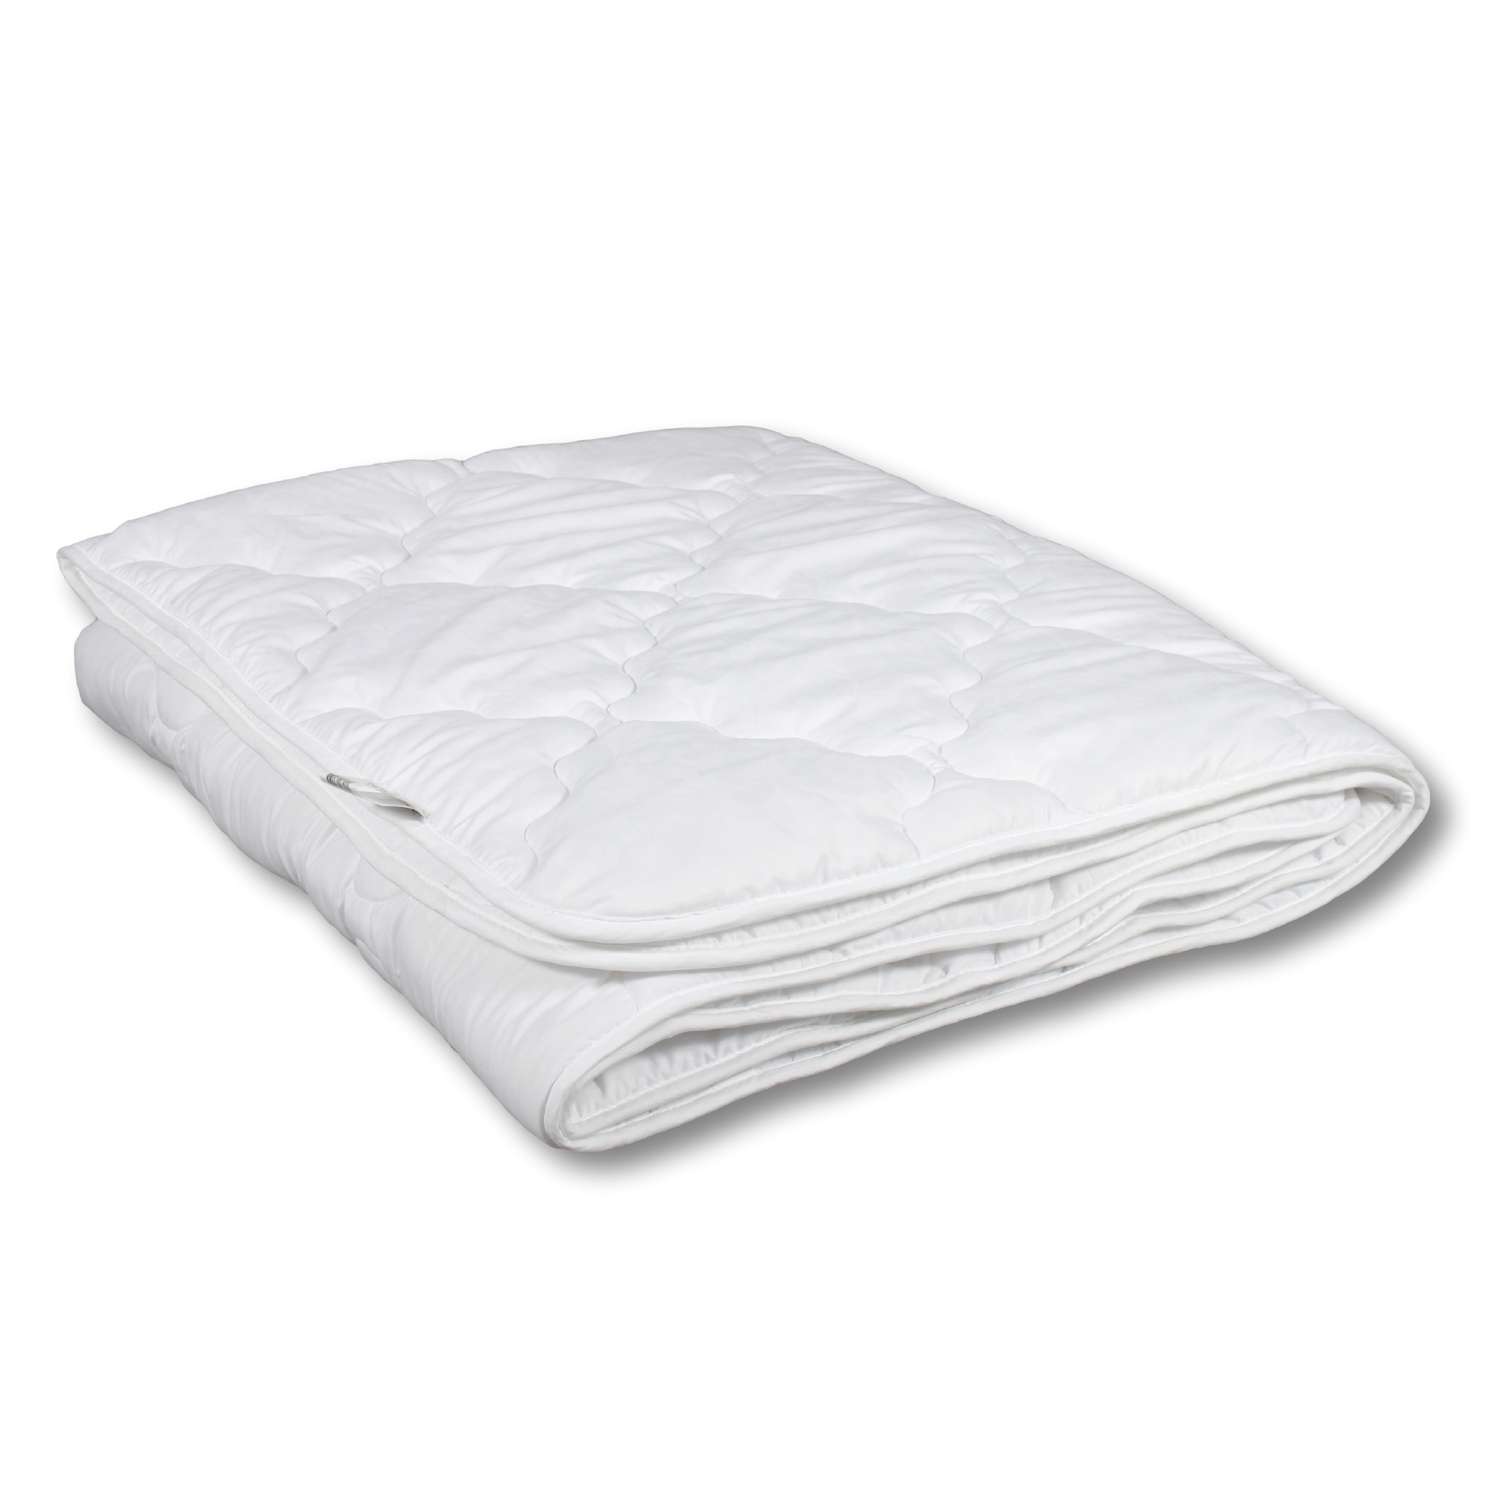 Одеяло Адажио-Эко Альвитек 140х205 см легкое - фото 1